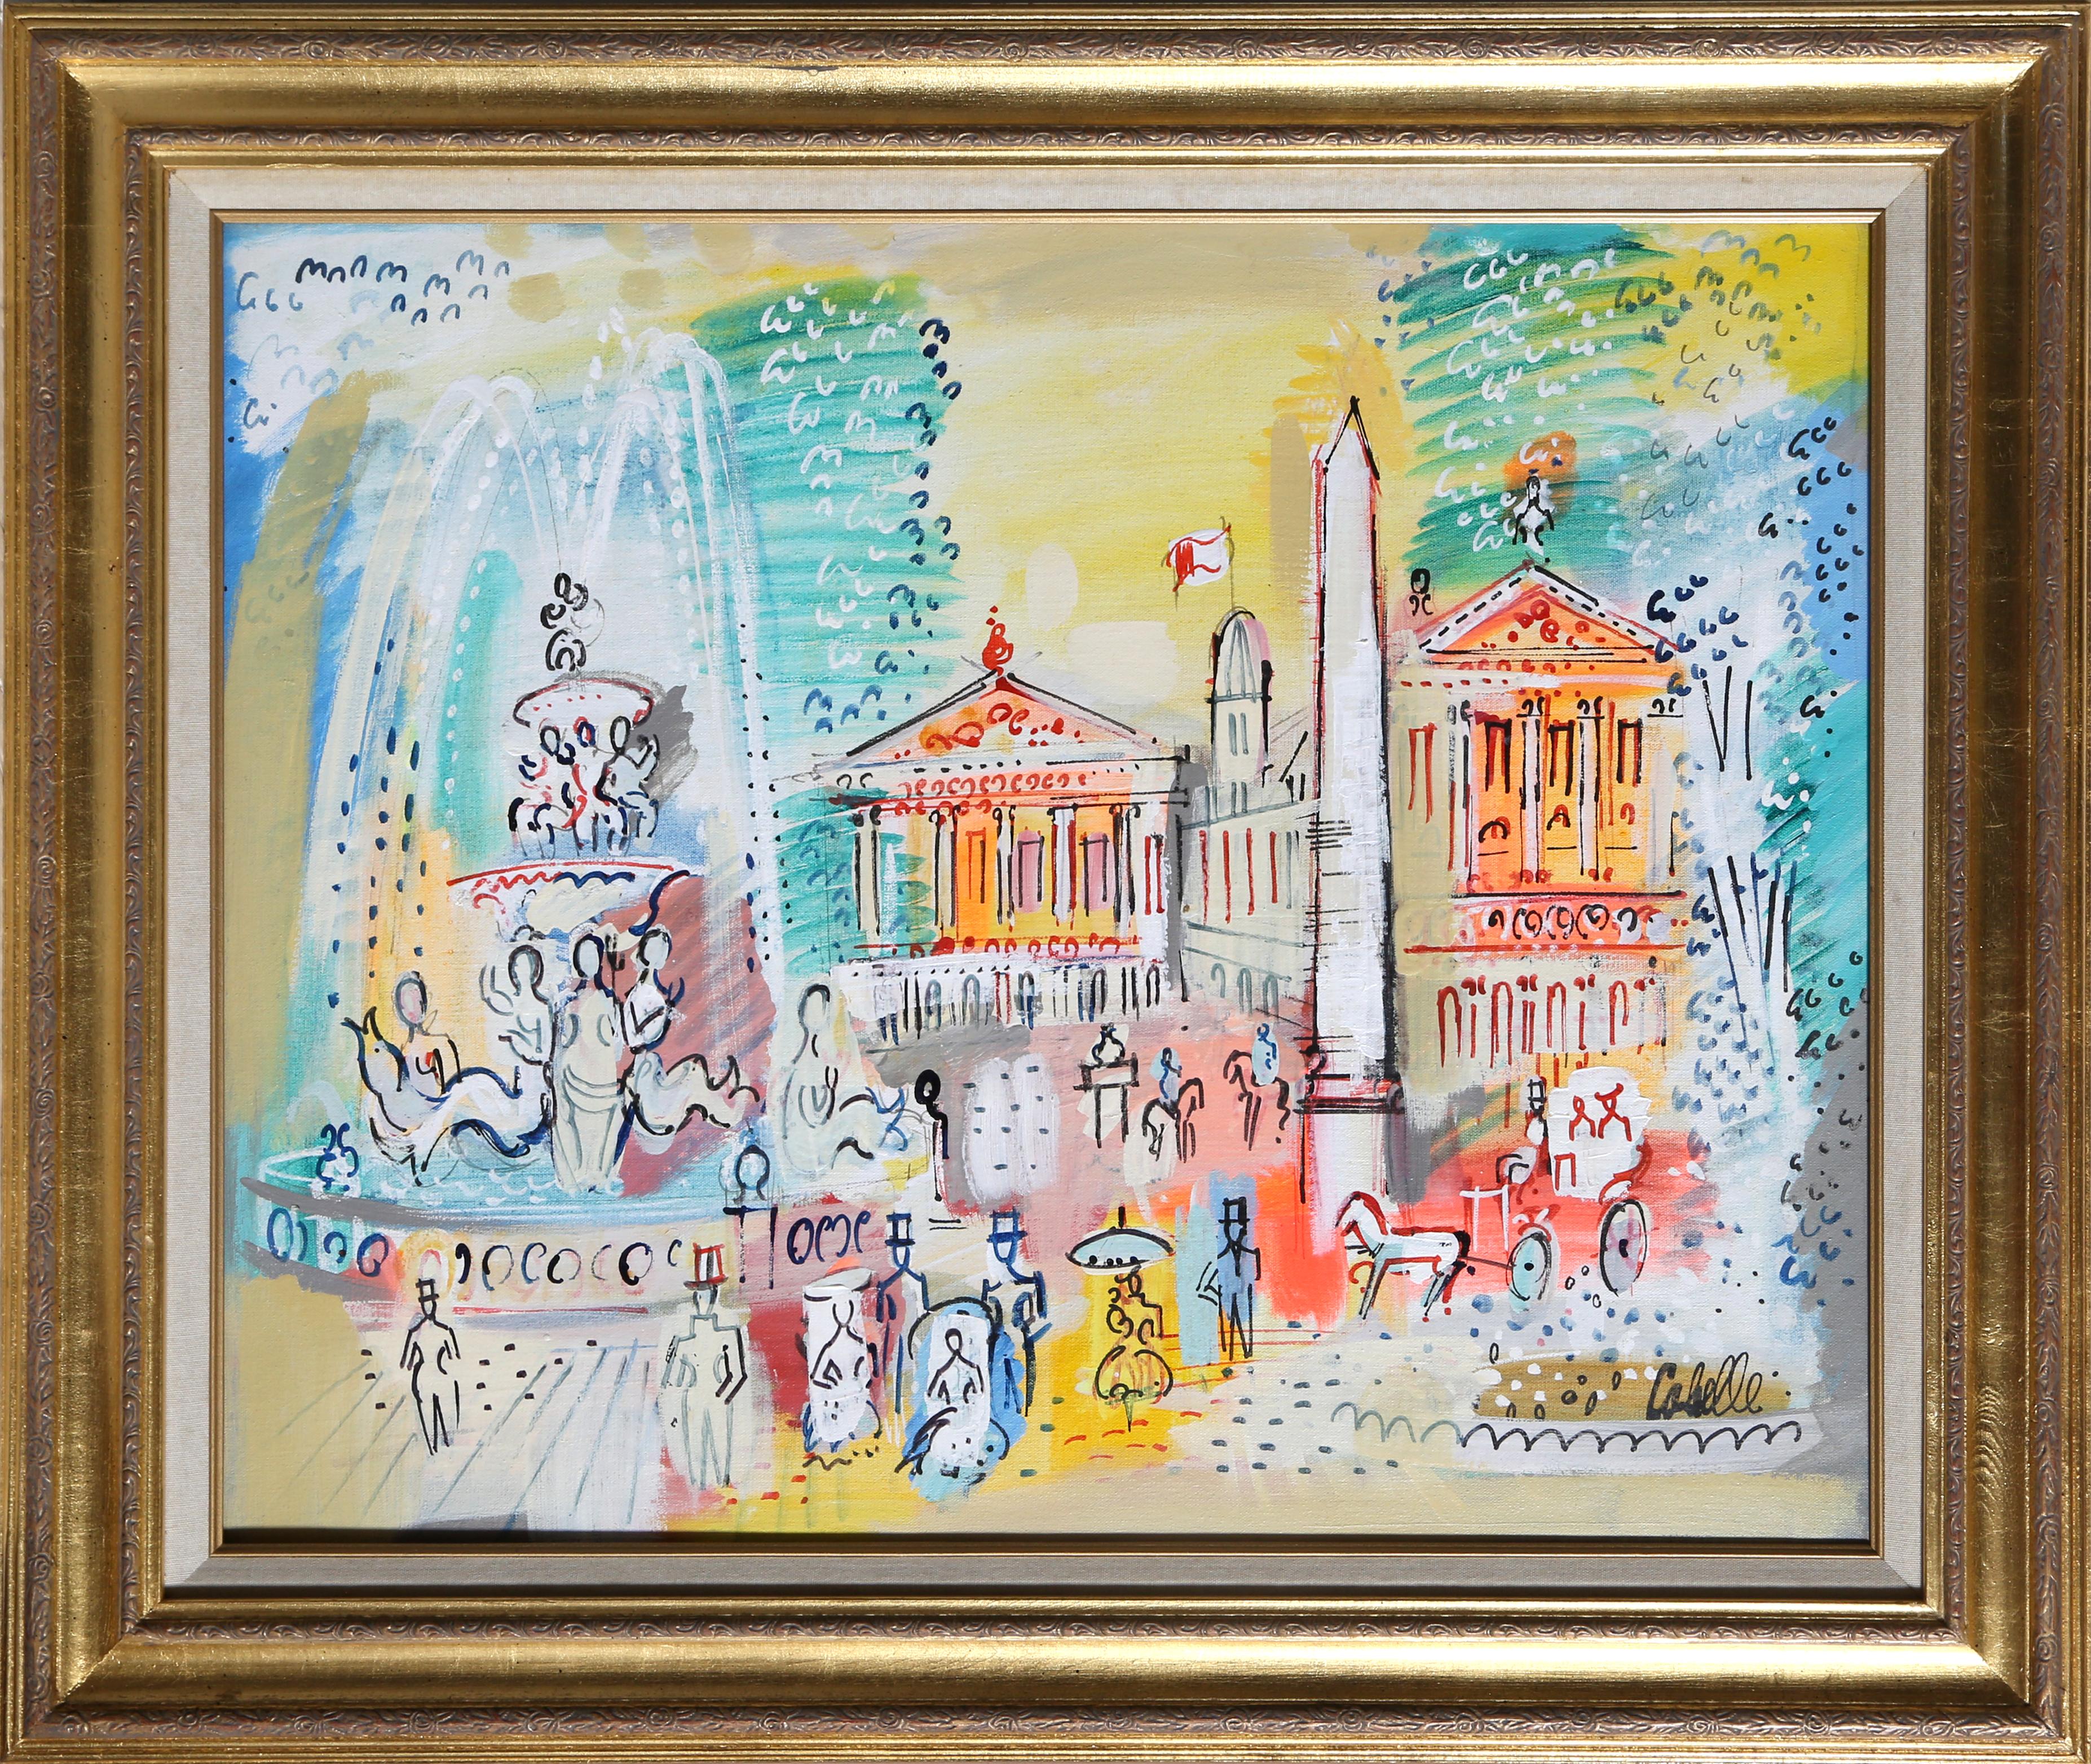 Künstler:  Charles Cobelle, Franzose (1902 - 1994)
Titel:  Paris, Frankreich
Jahr:  um 1966
Medium:  Acryl auf Leinwand, signiert v.l.n.r.
Größe:  20 x 24 Zoll (50,8 x 60,96 cm)
Rahmengröße:  31 x 37 Zoll

